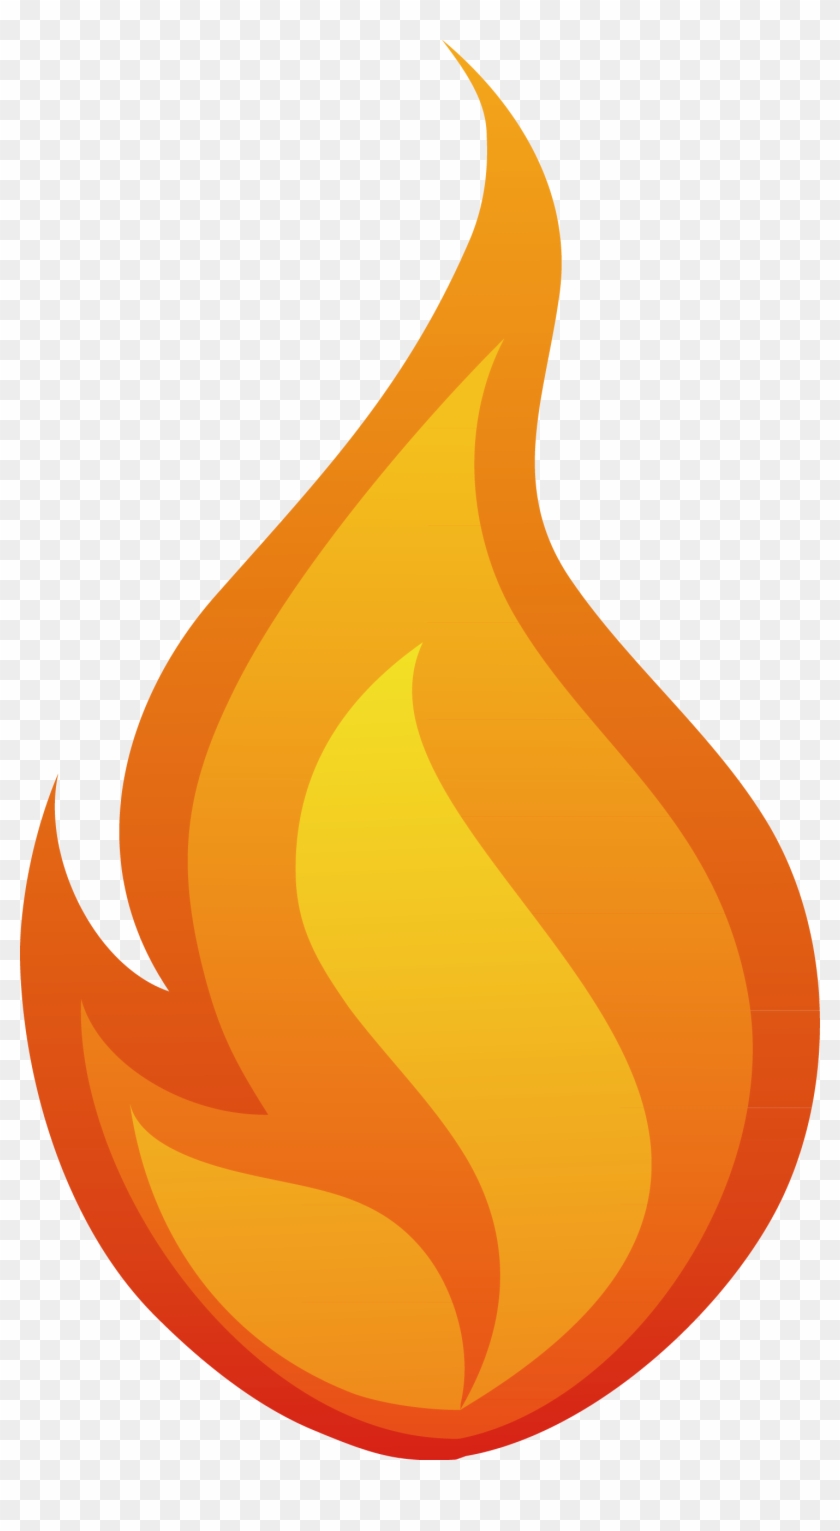 Flame Fire Clip Art - Flame Fire Clip Art #825704